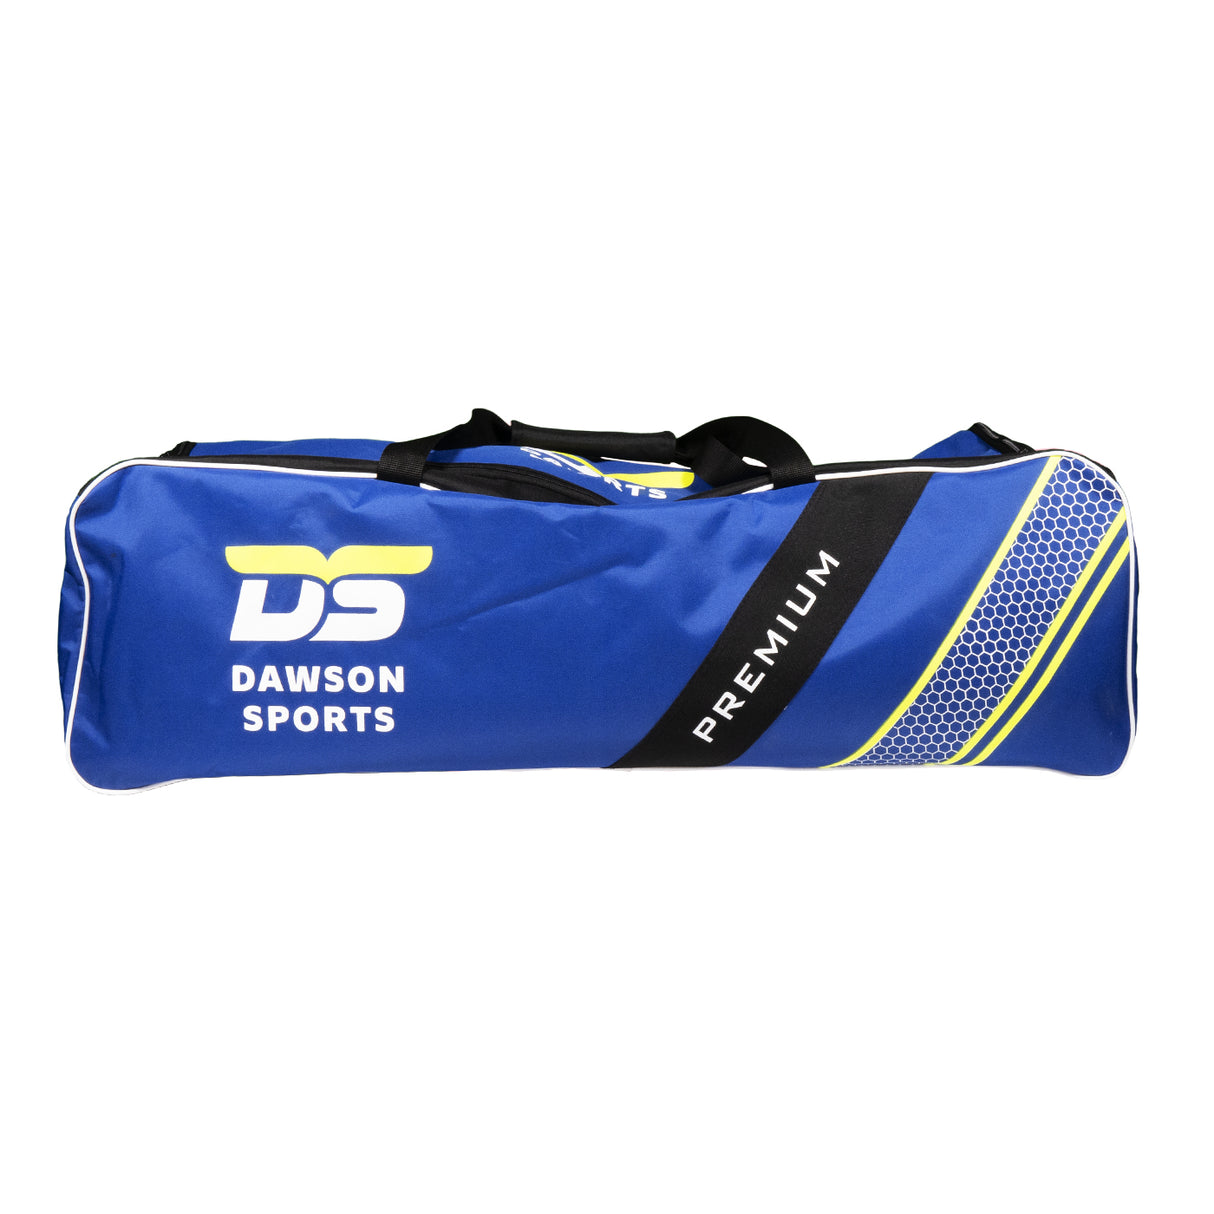 DS Club Cricket Kit Bag